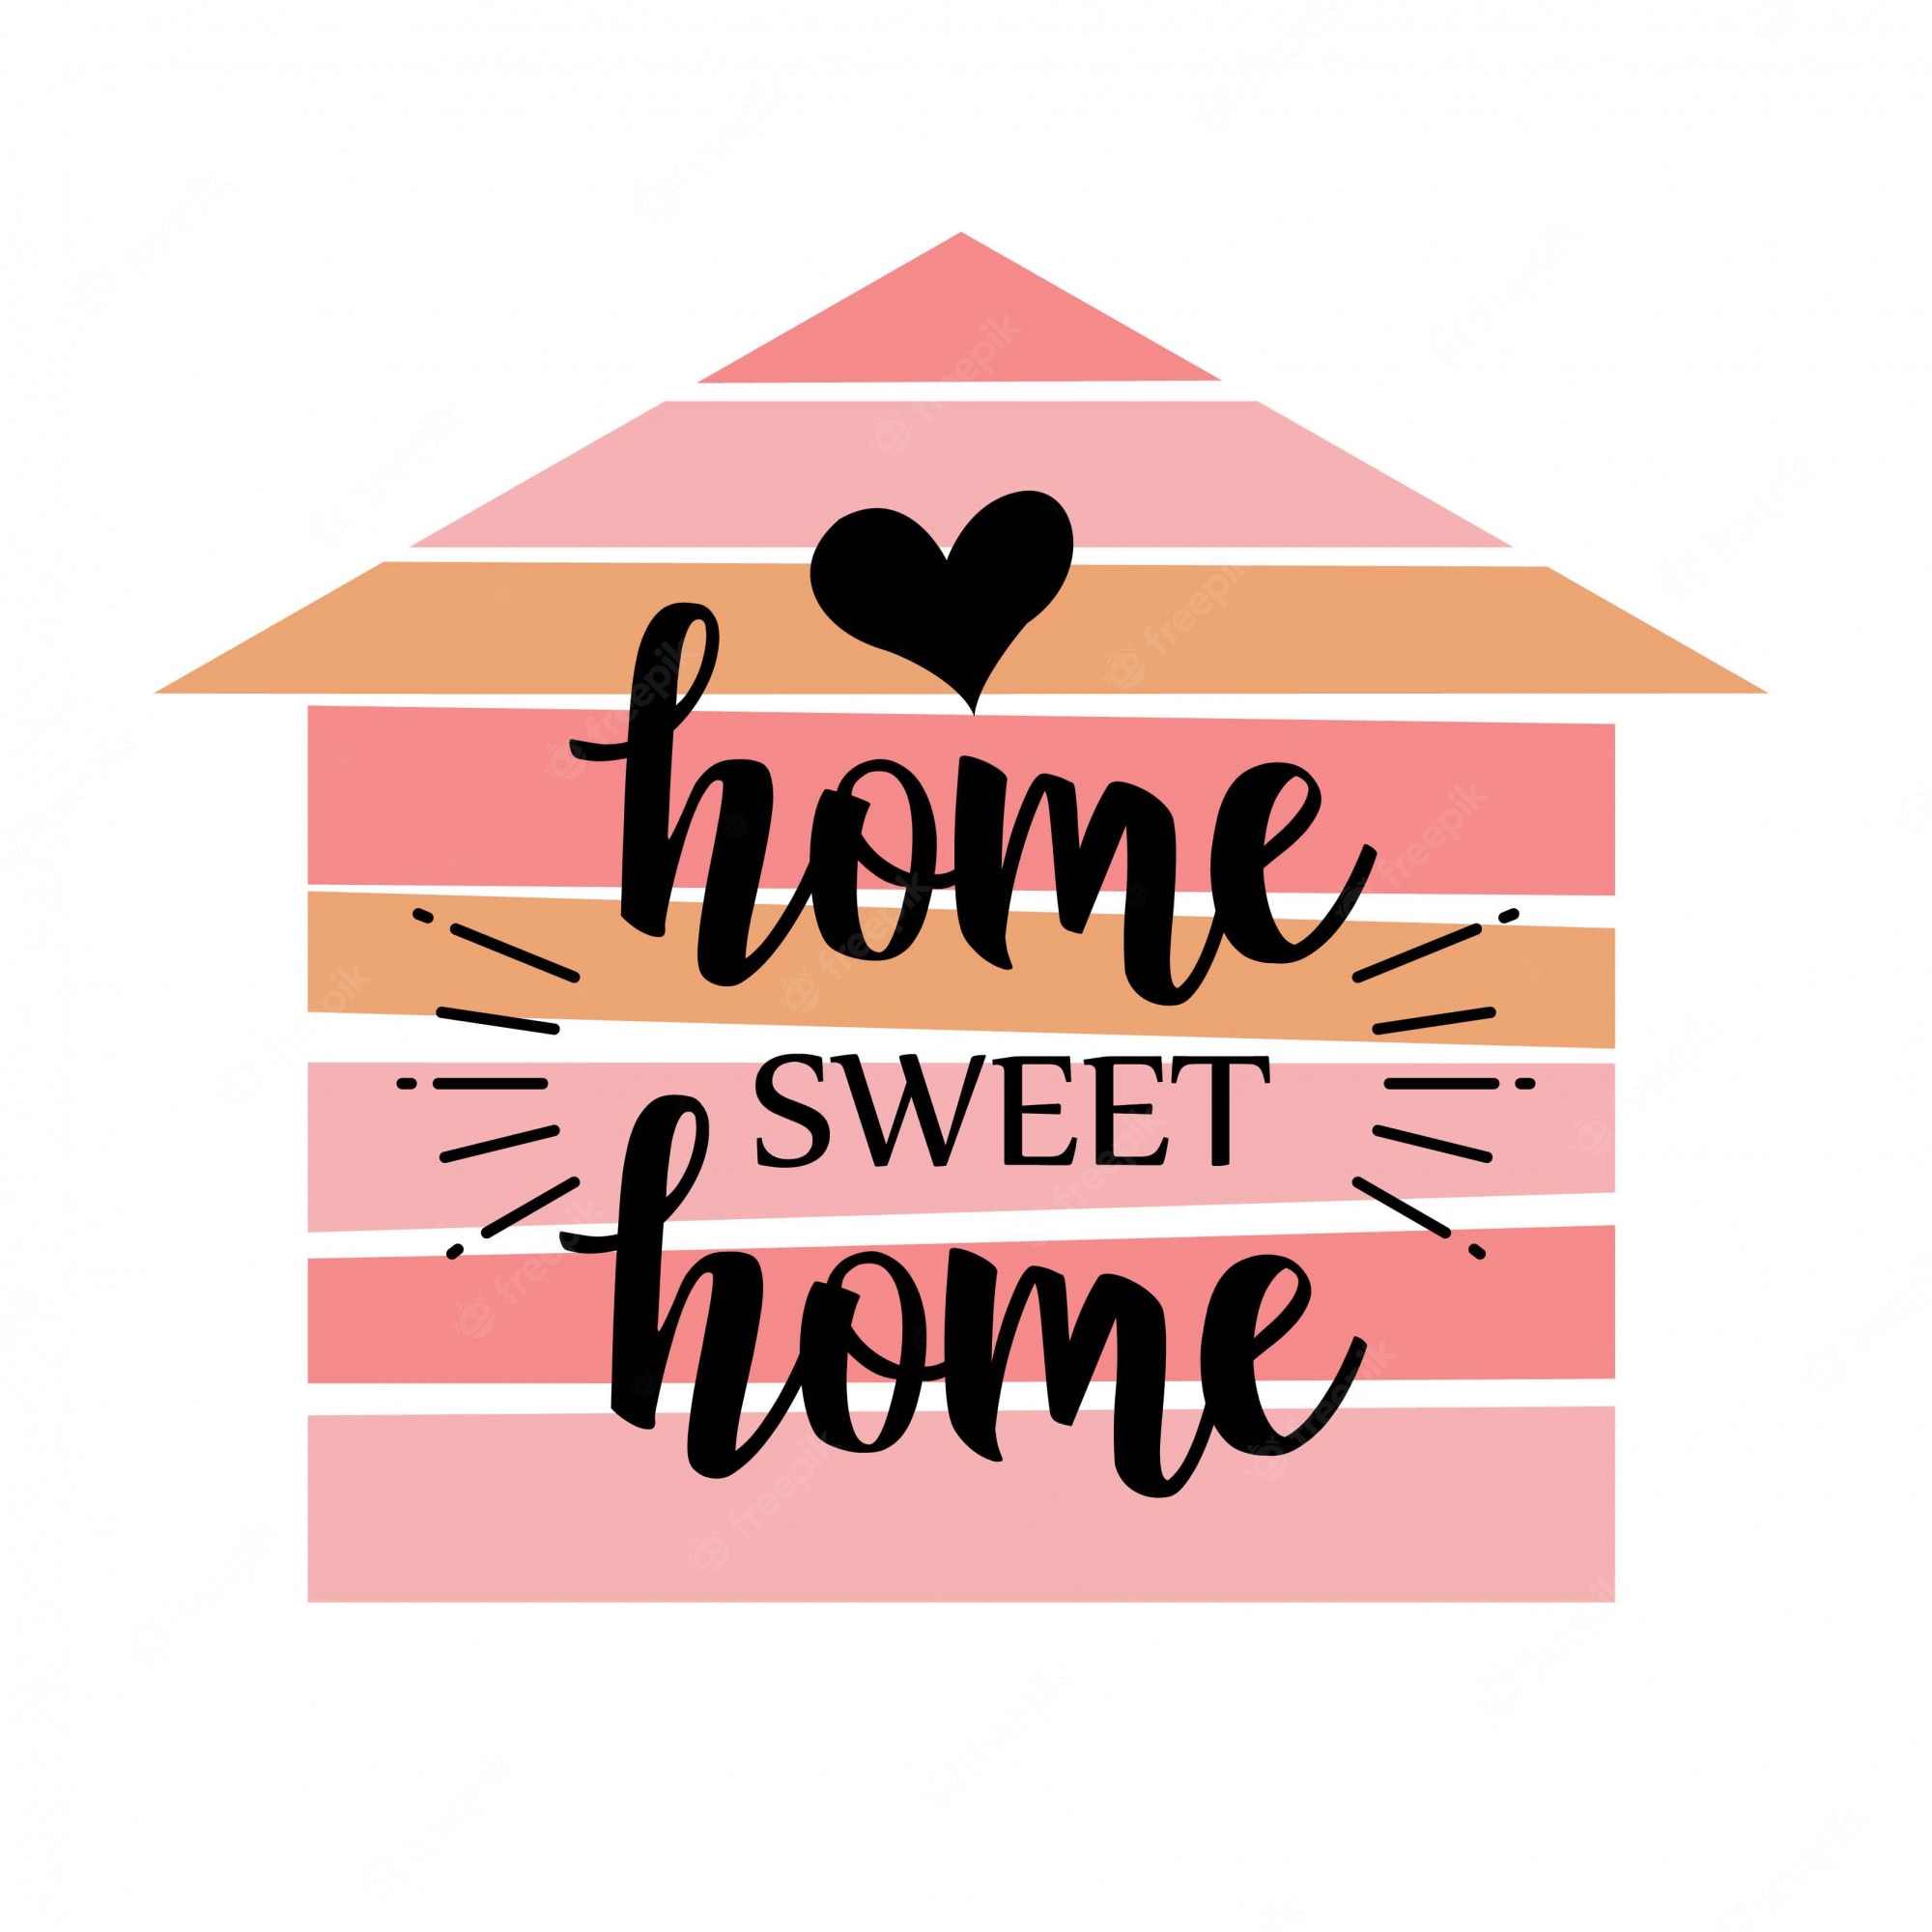 Sweet home stories. Надпись Home. Надпись Свит хоум. Дом милый дом надпись. Home Sweet Home надпись.